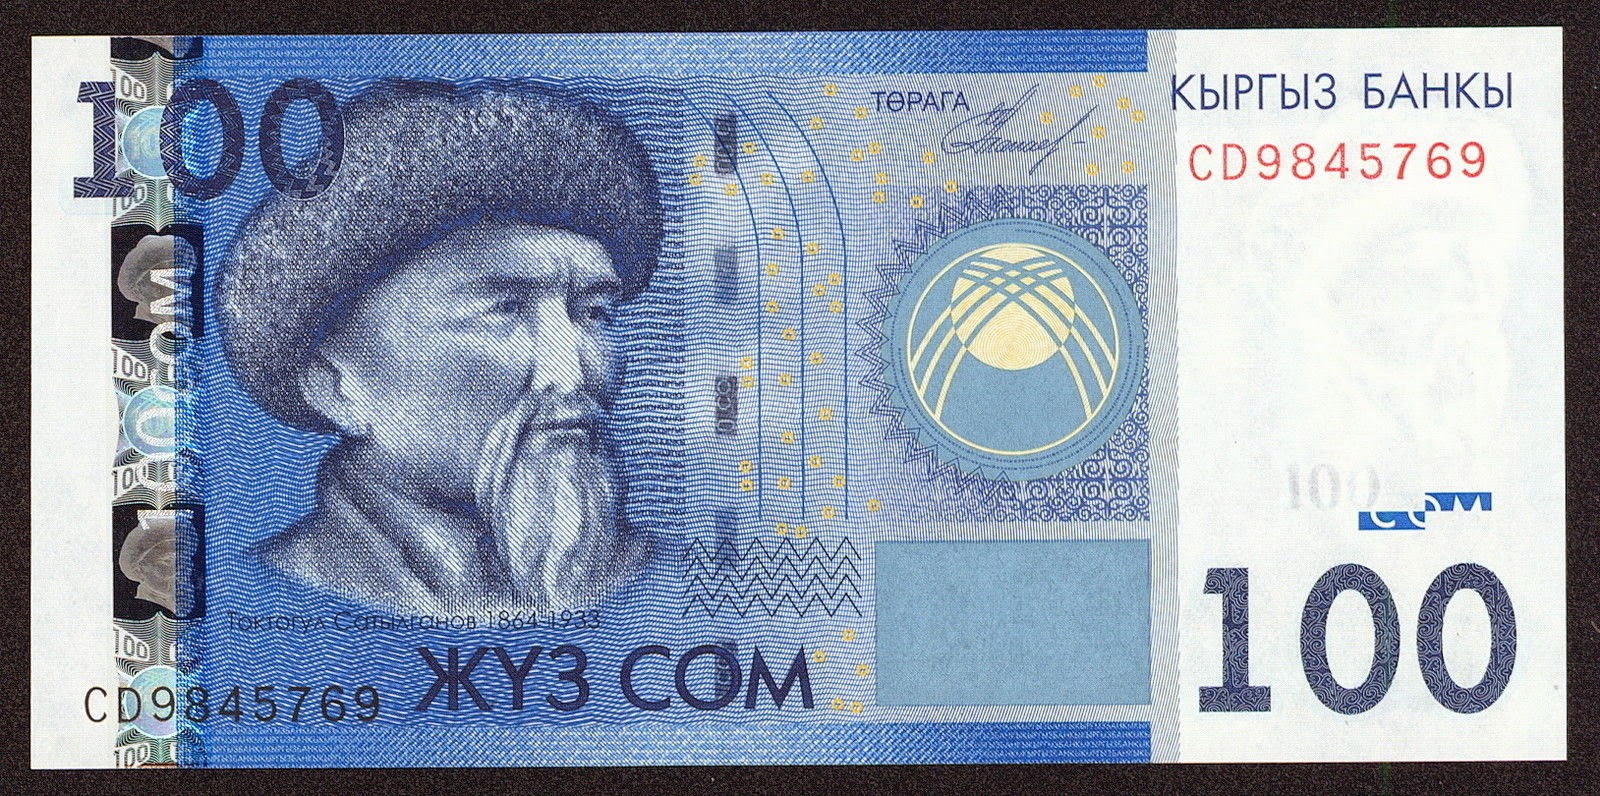 Kyrgyzstan Banknotes 100 Som note